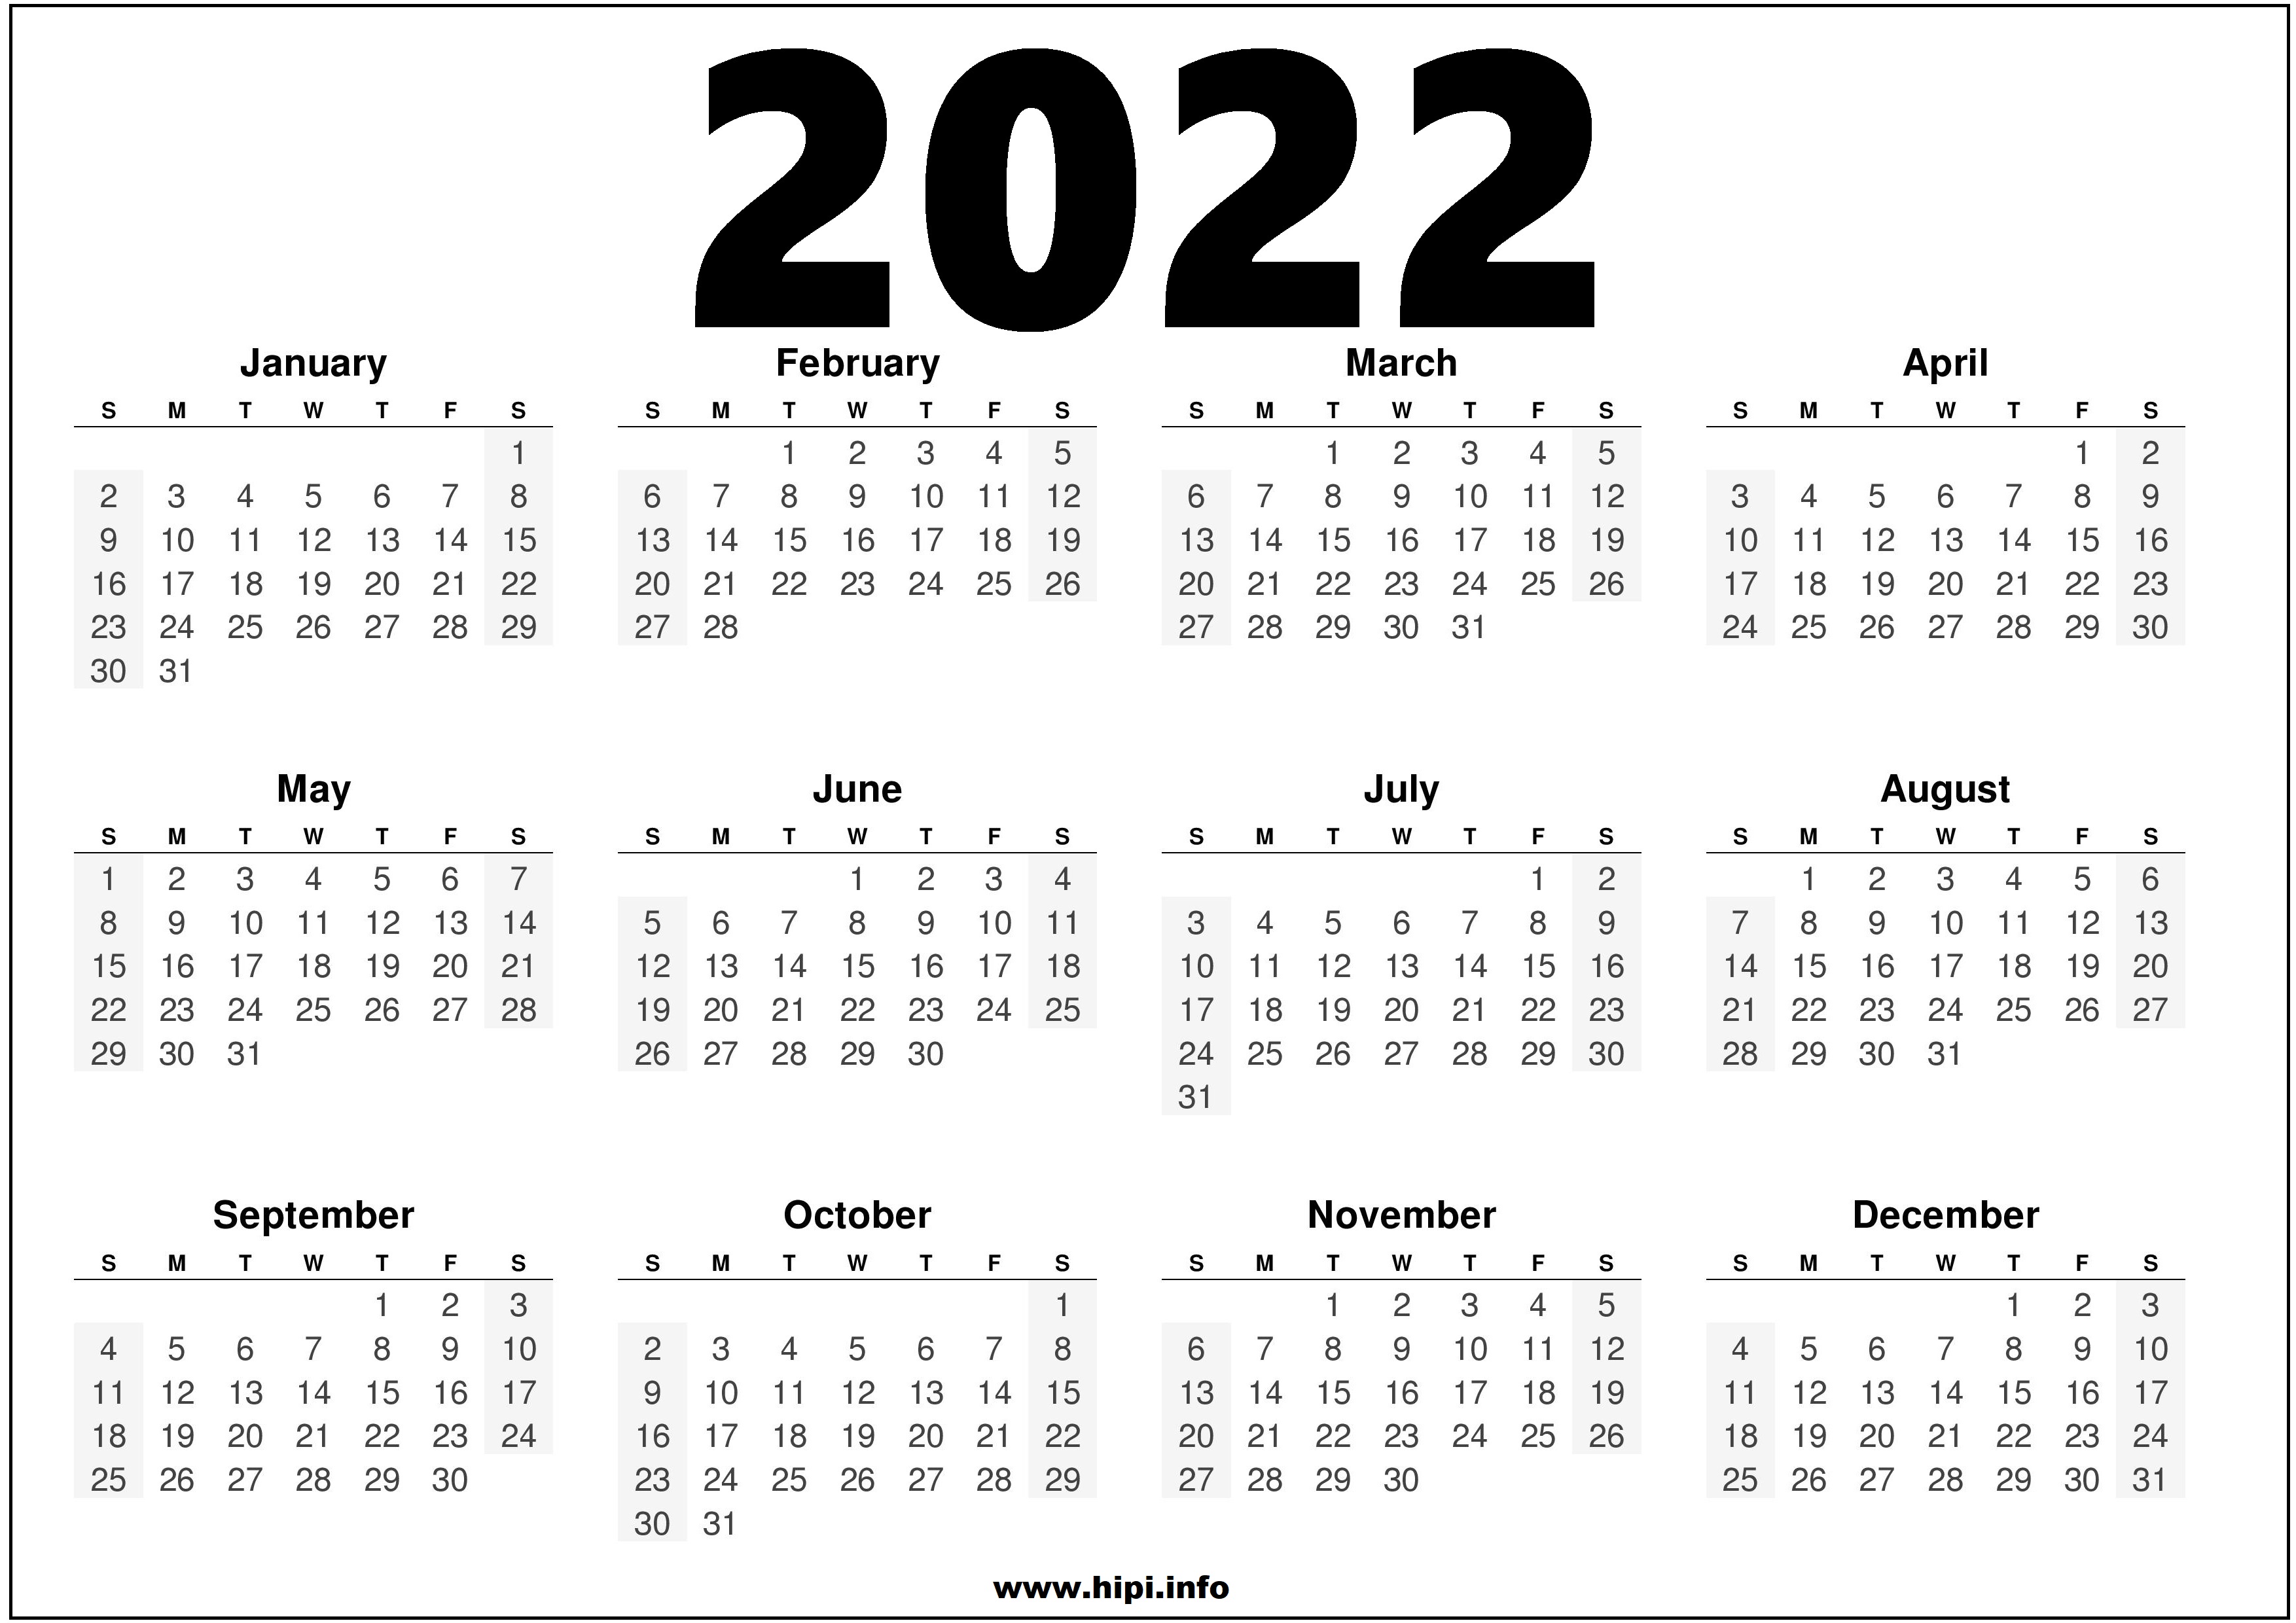 Download Calendar 2022 2022 Printable Calendar Us Free Download - Hipi.info | Calendars Printable  Free